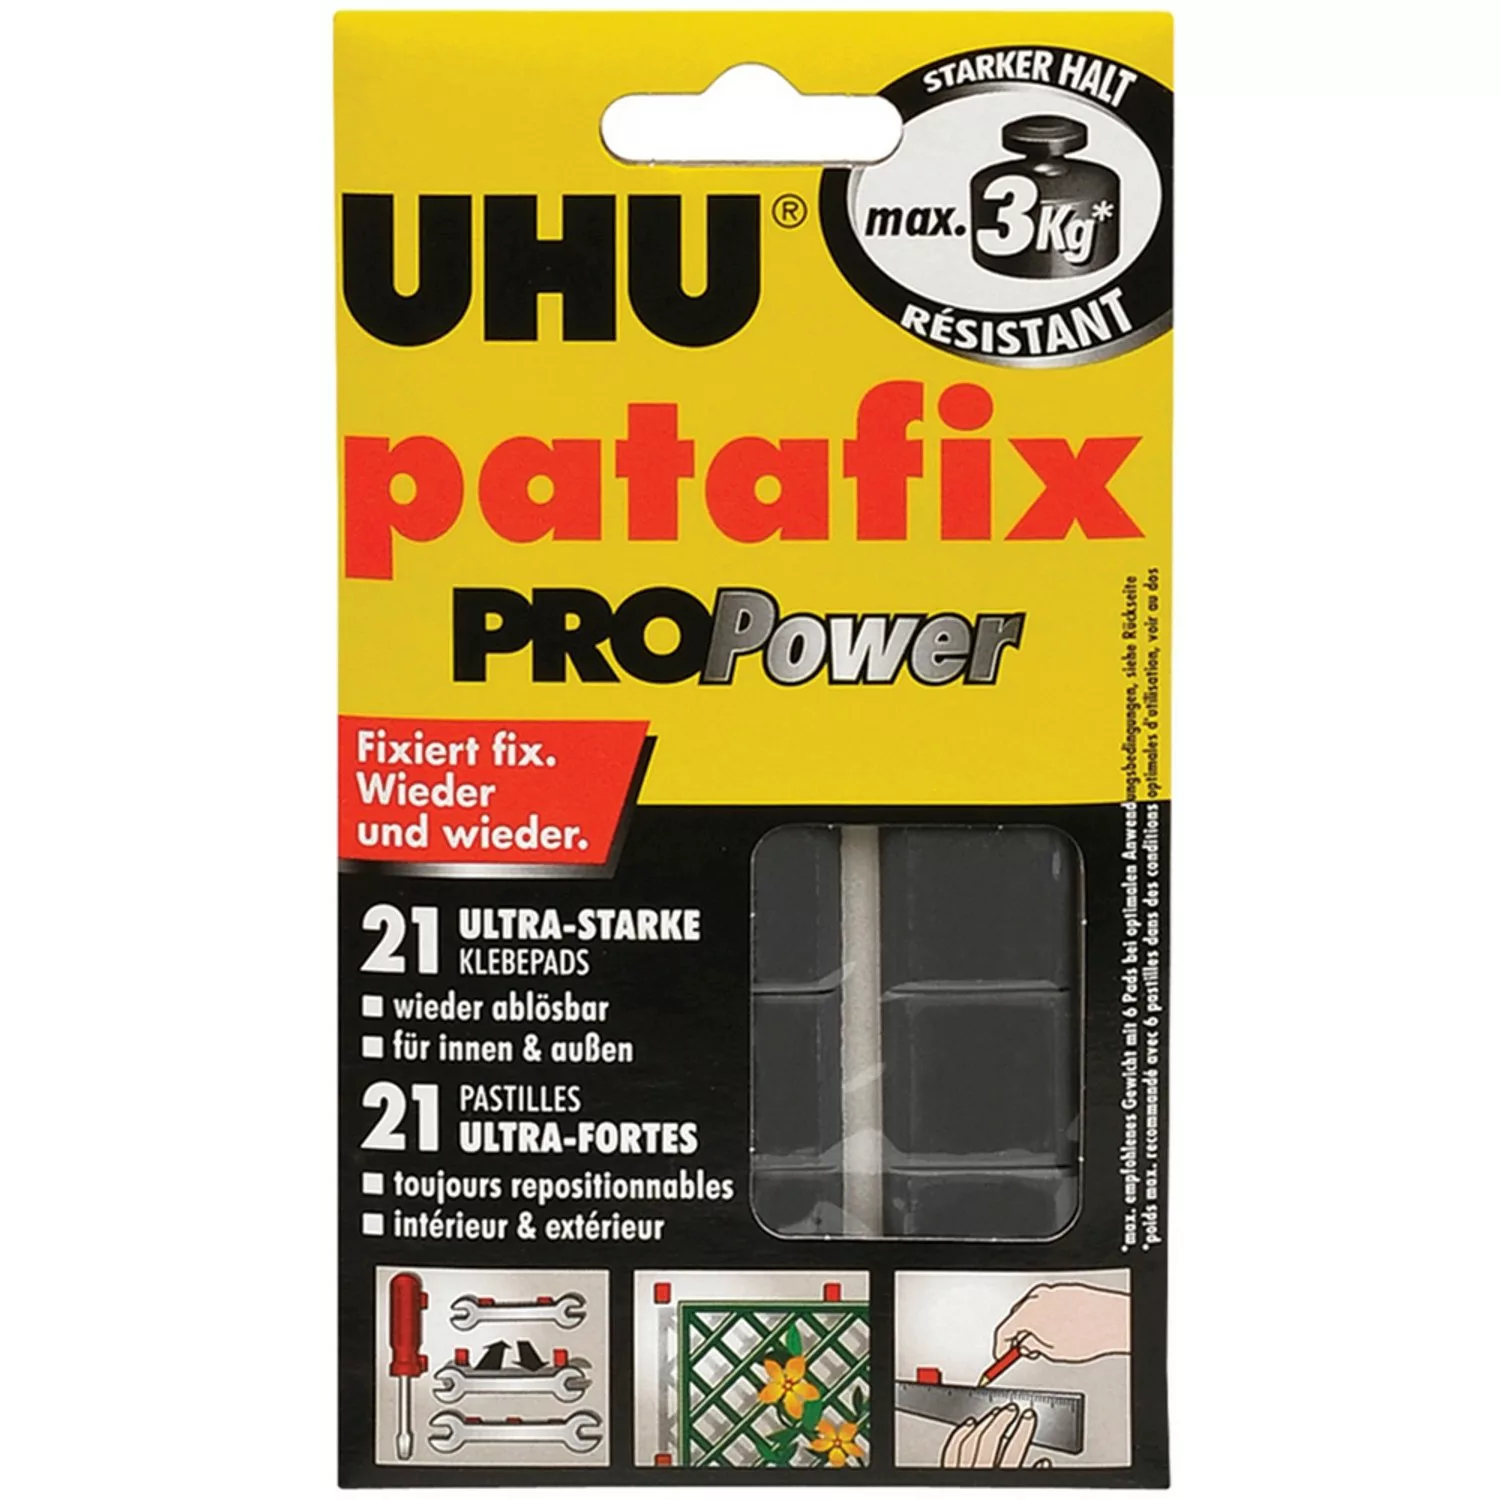 Uhu Patafix Pro Power 21 Pads günstig online kaufen